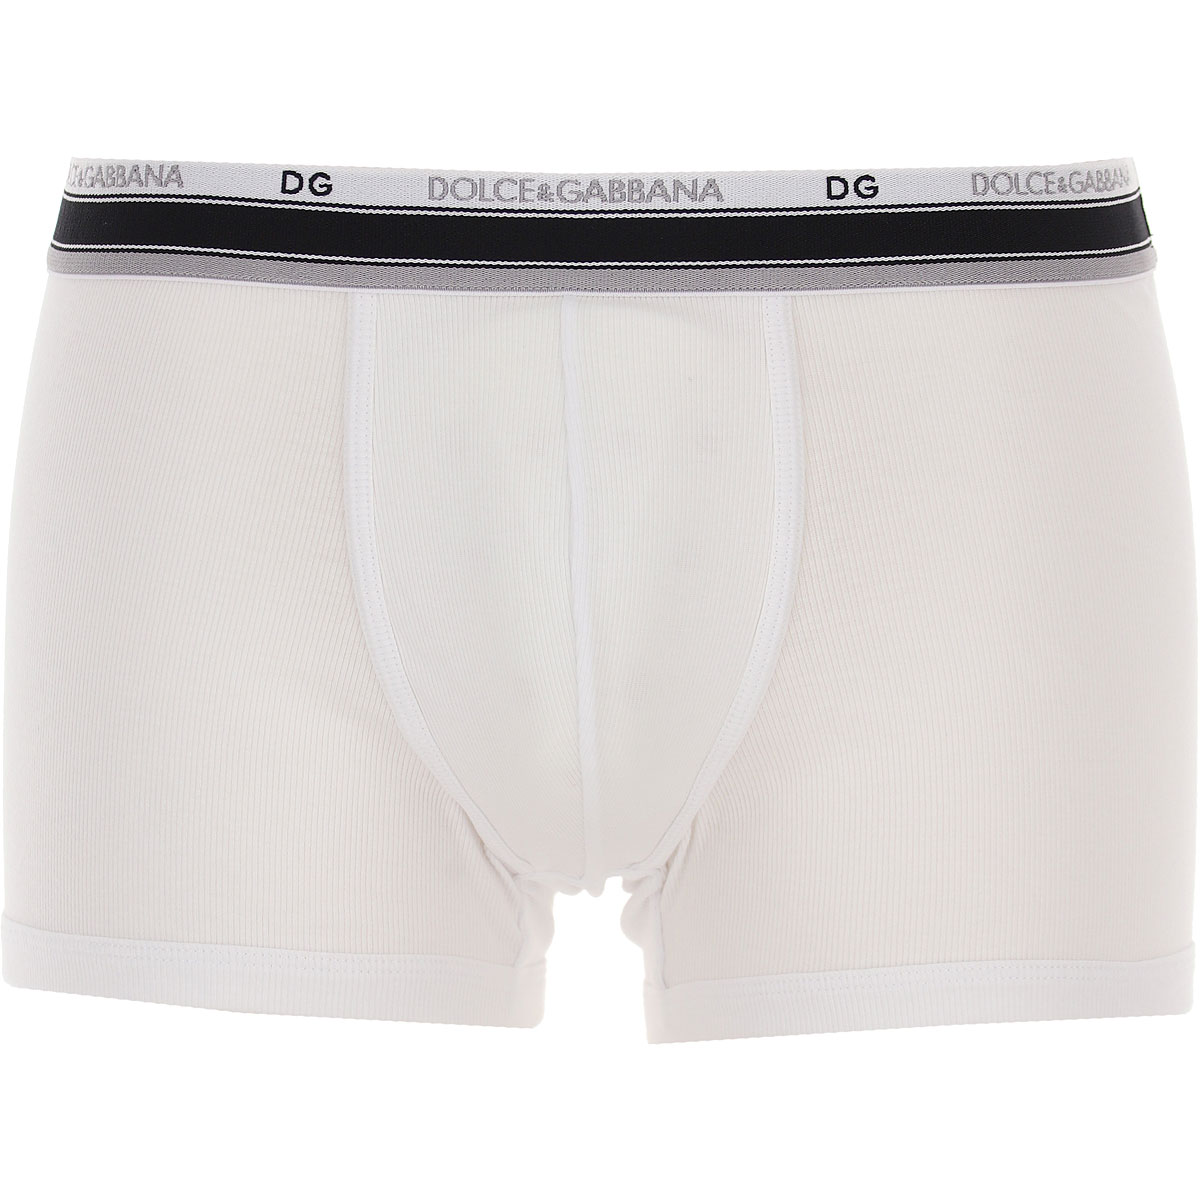 Mens Underwear Dolce & Gabbana, Style code: n4b43j-fugf5-w0800